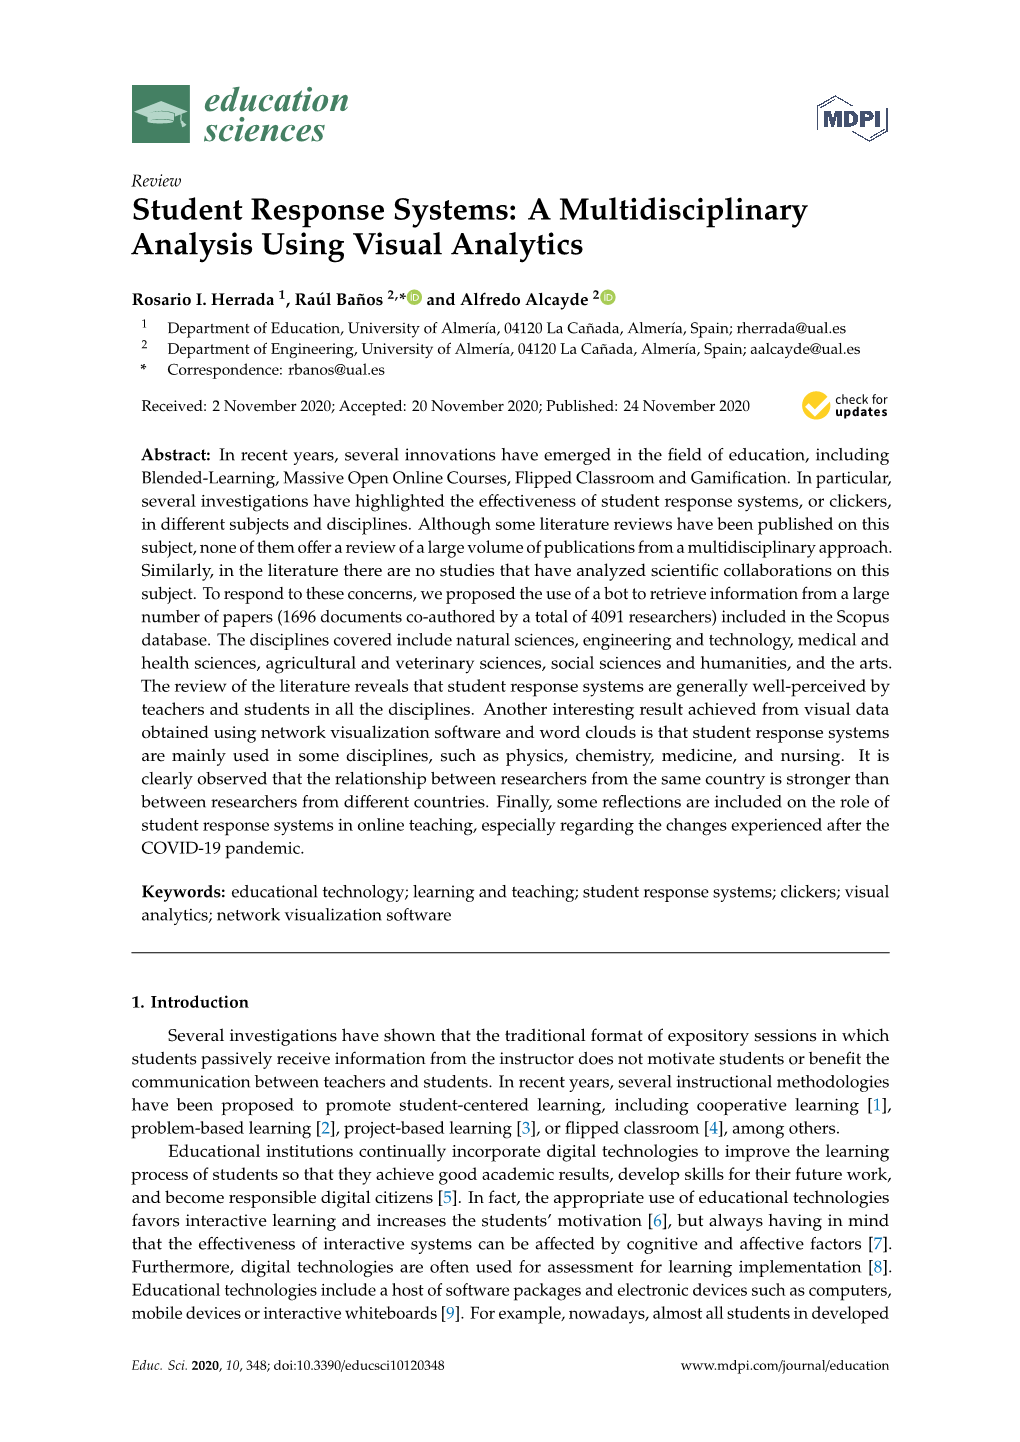 Student Response Systems: a Multidisciplinary Analysis Using Visual Analytics